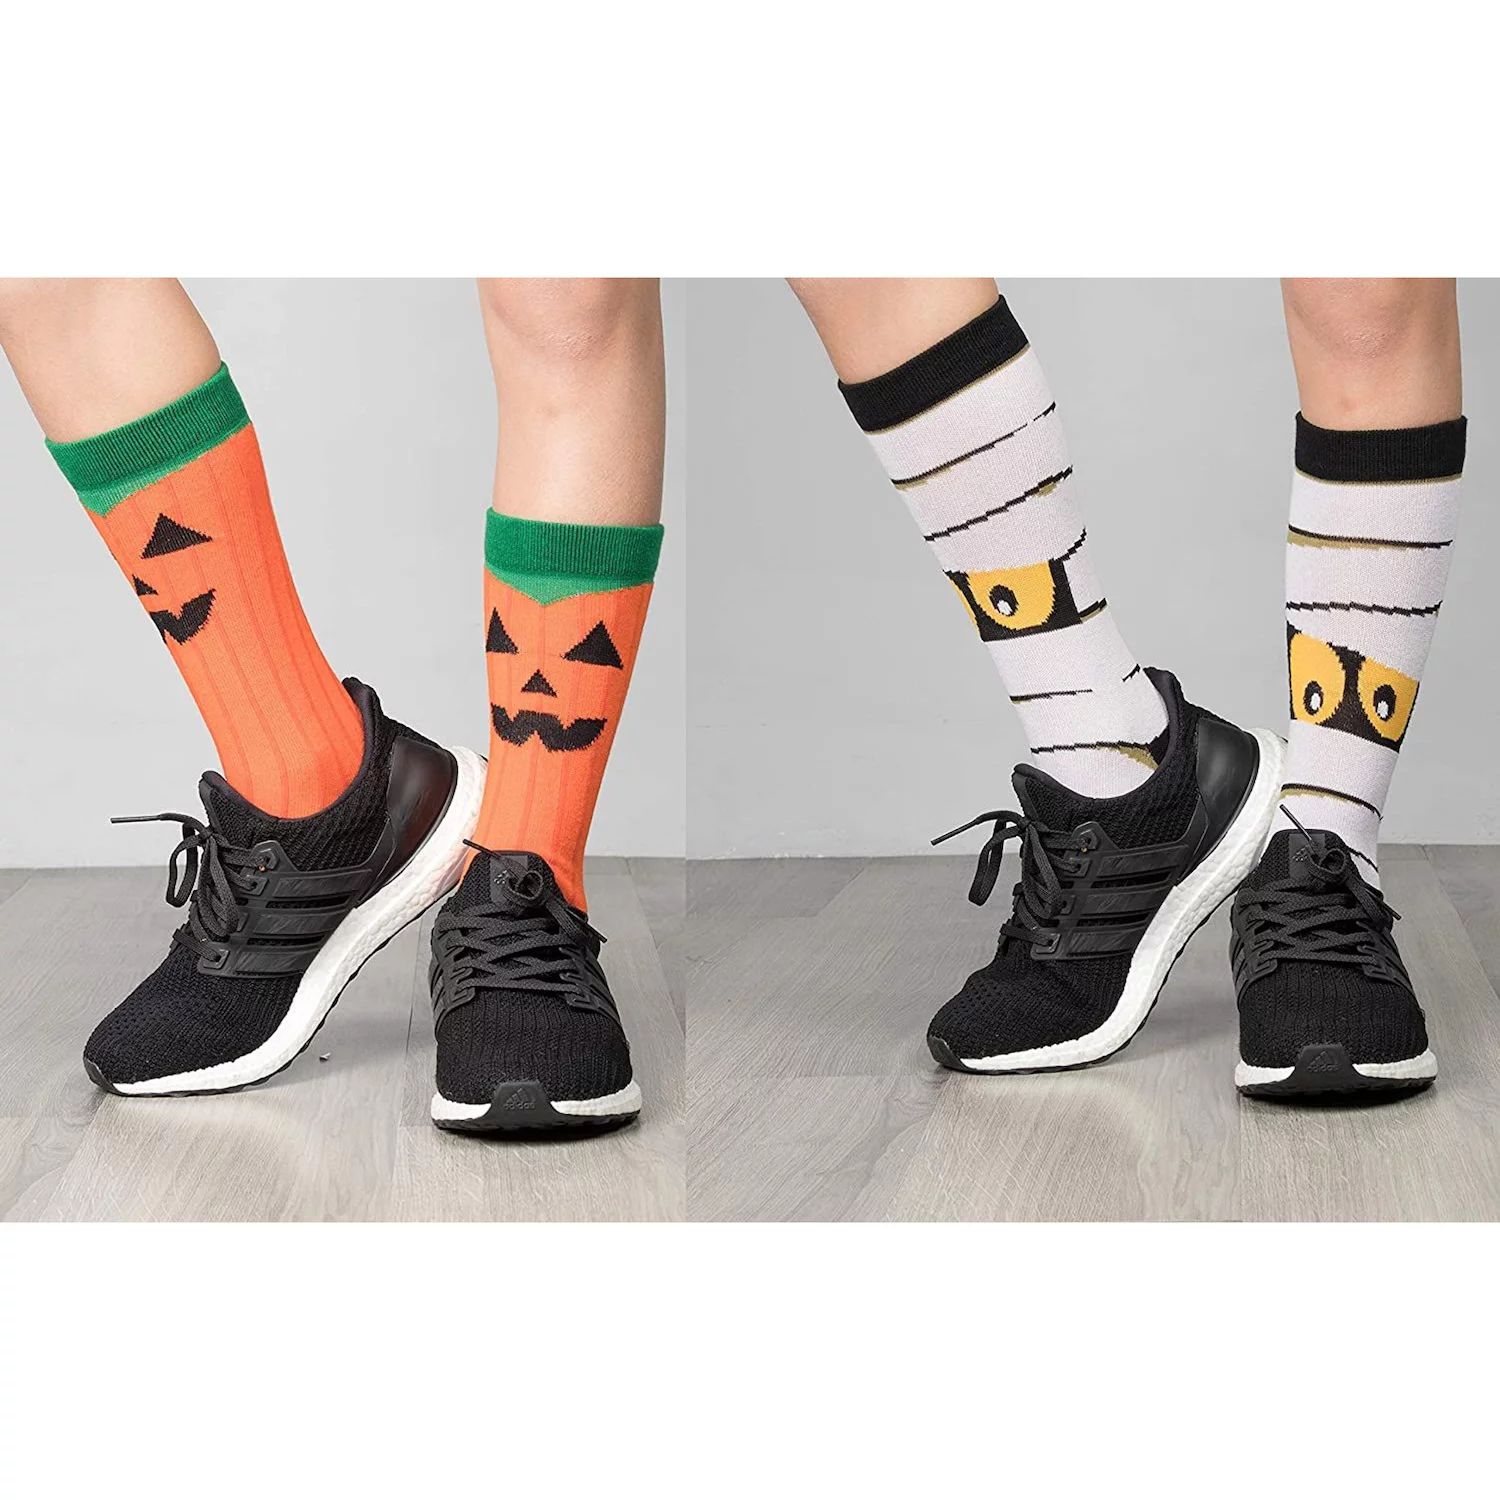 3 пары носков для Хэллоуина, мужские и женские, тыква, монстр, мумия, новинка в подарок (унисекс) Toe-Tally Sox